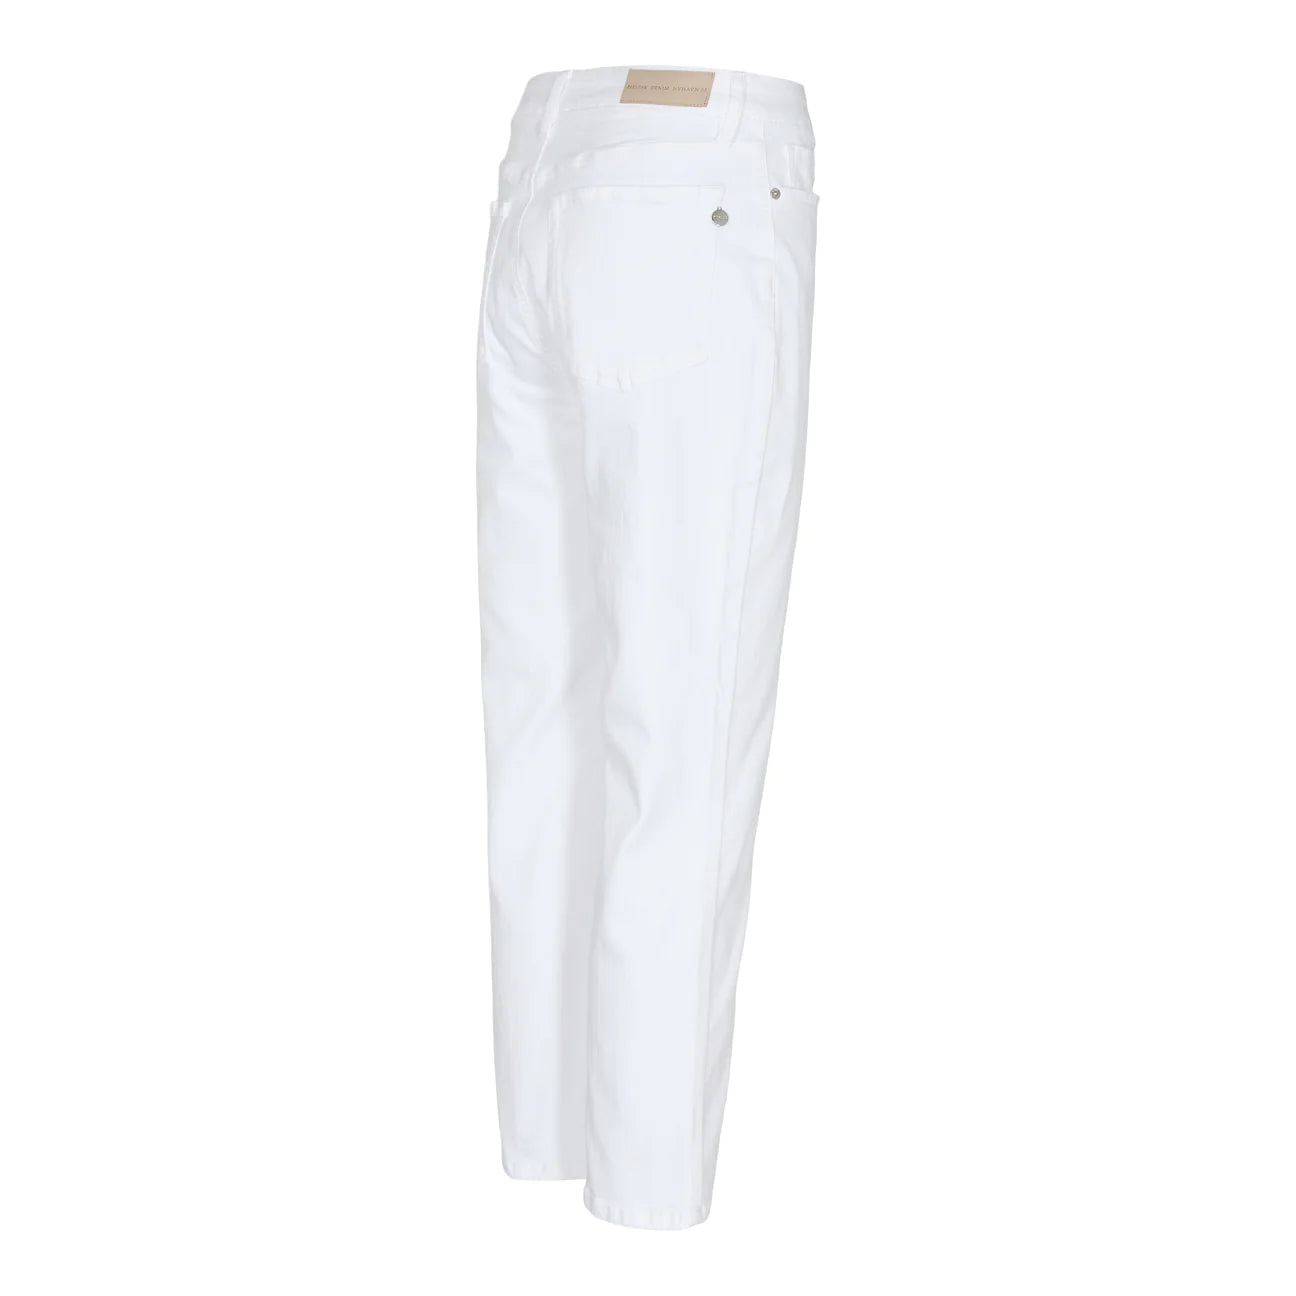 Pieszak PD-Trisha Jeans White